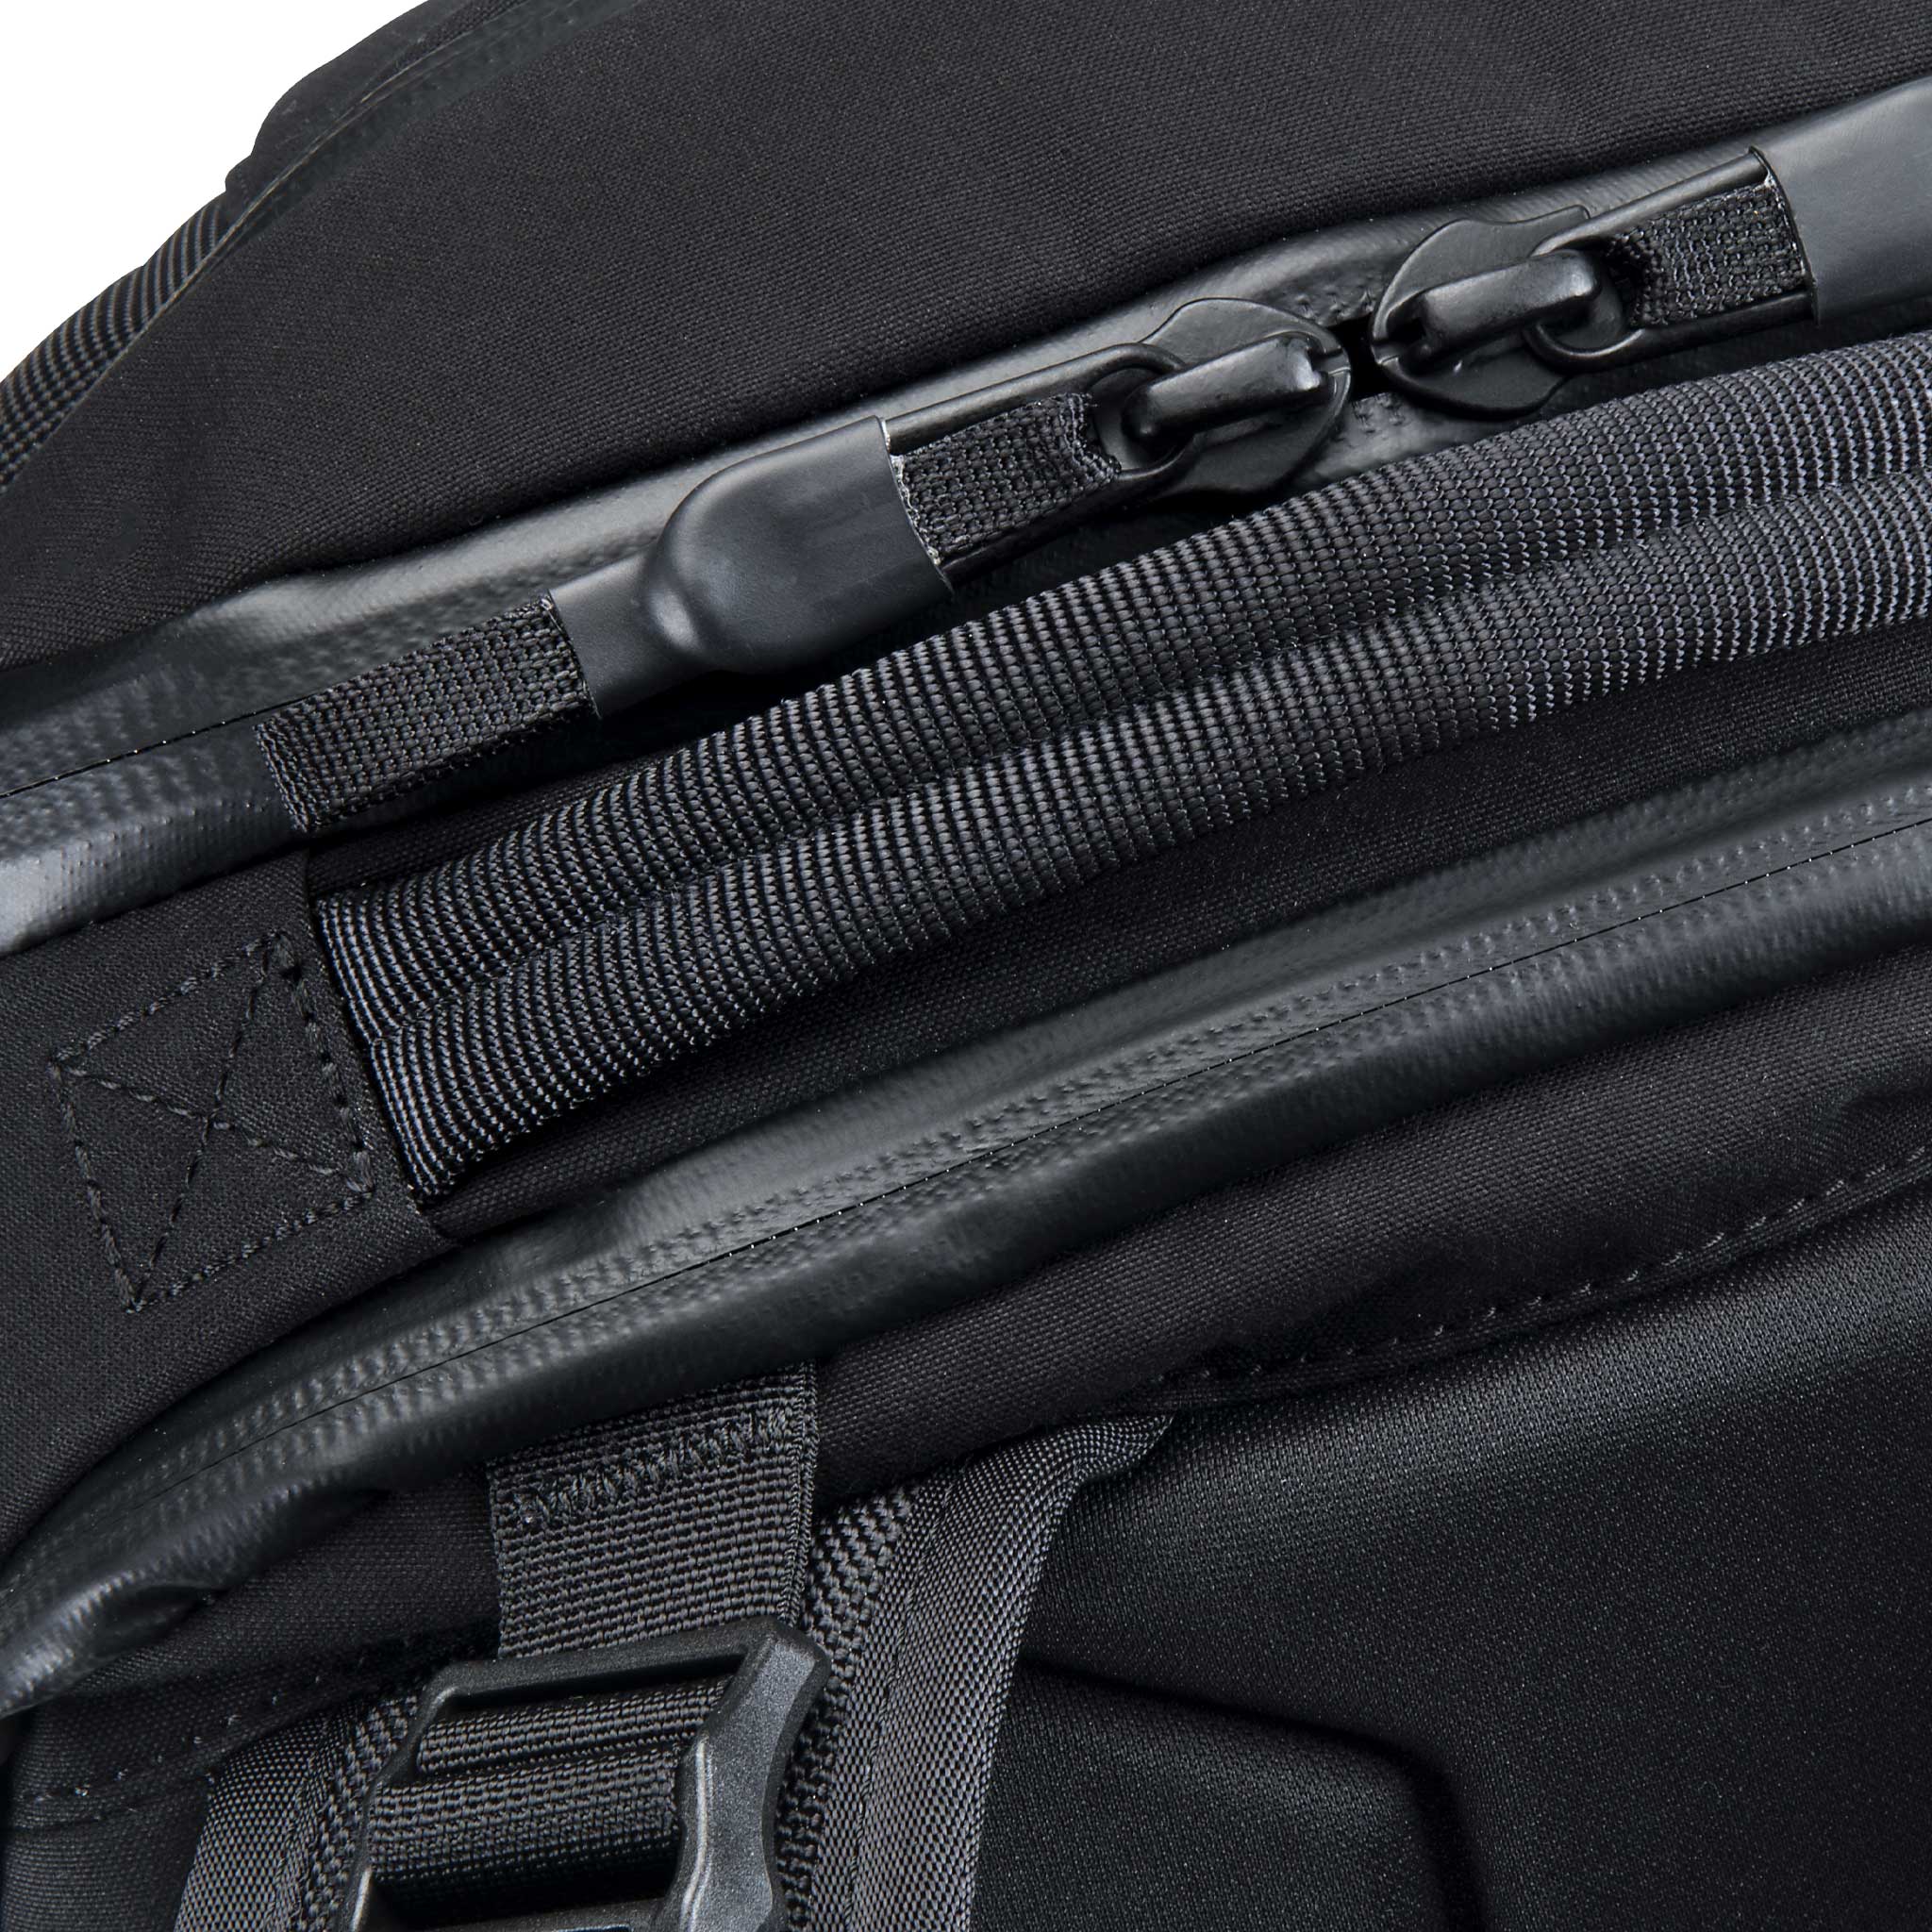 Black MPB35 Pelican Backpack Zippers